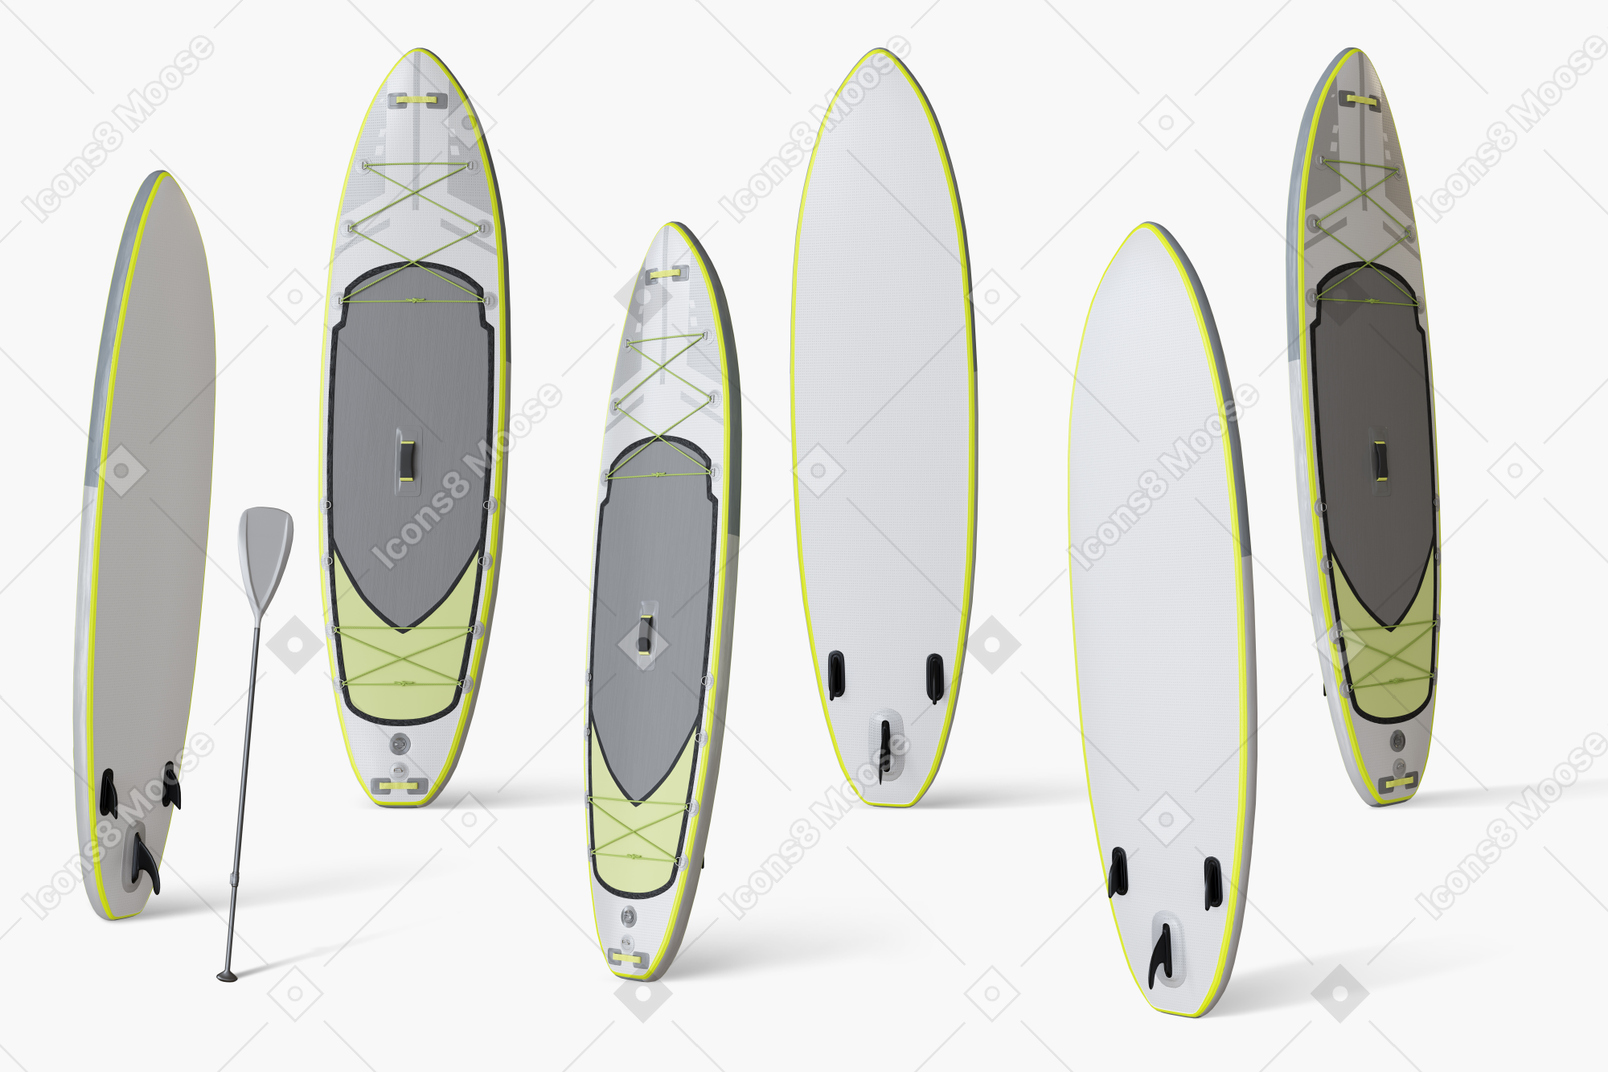 Tavole da surf su sfondo bianco